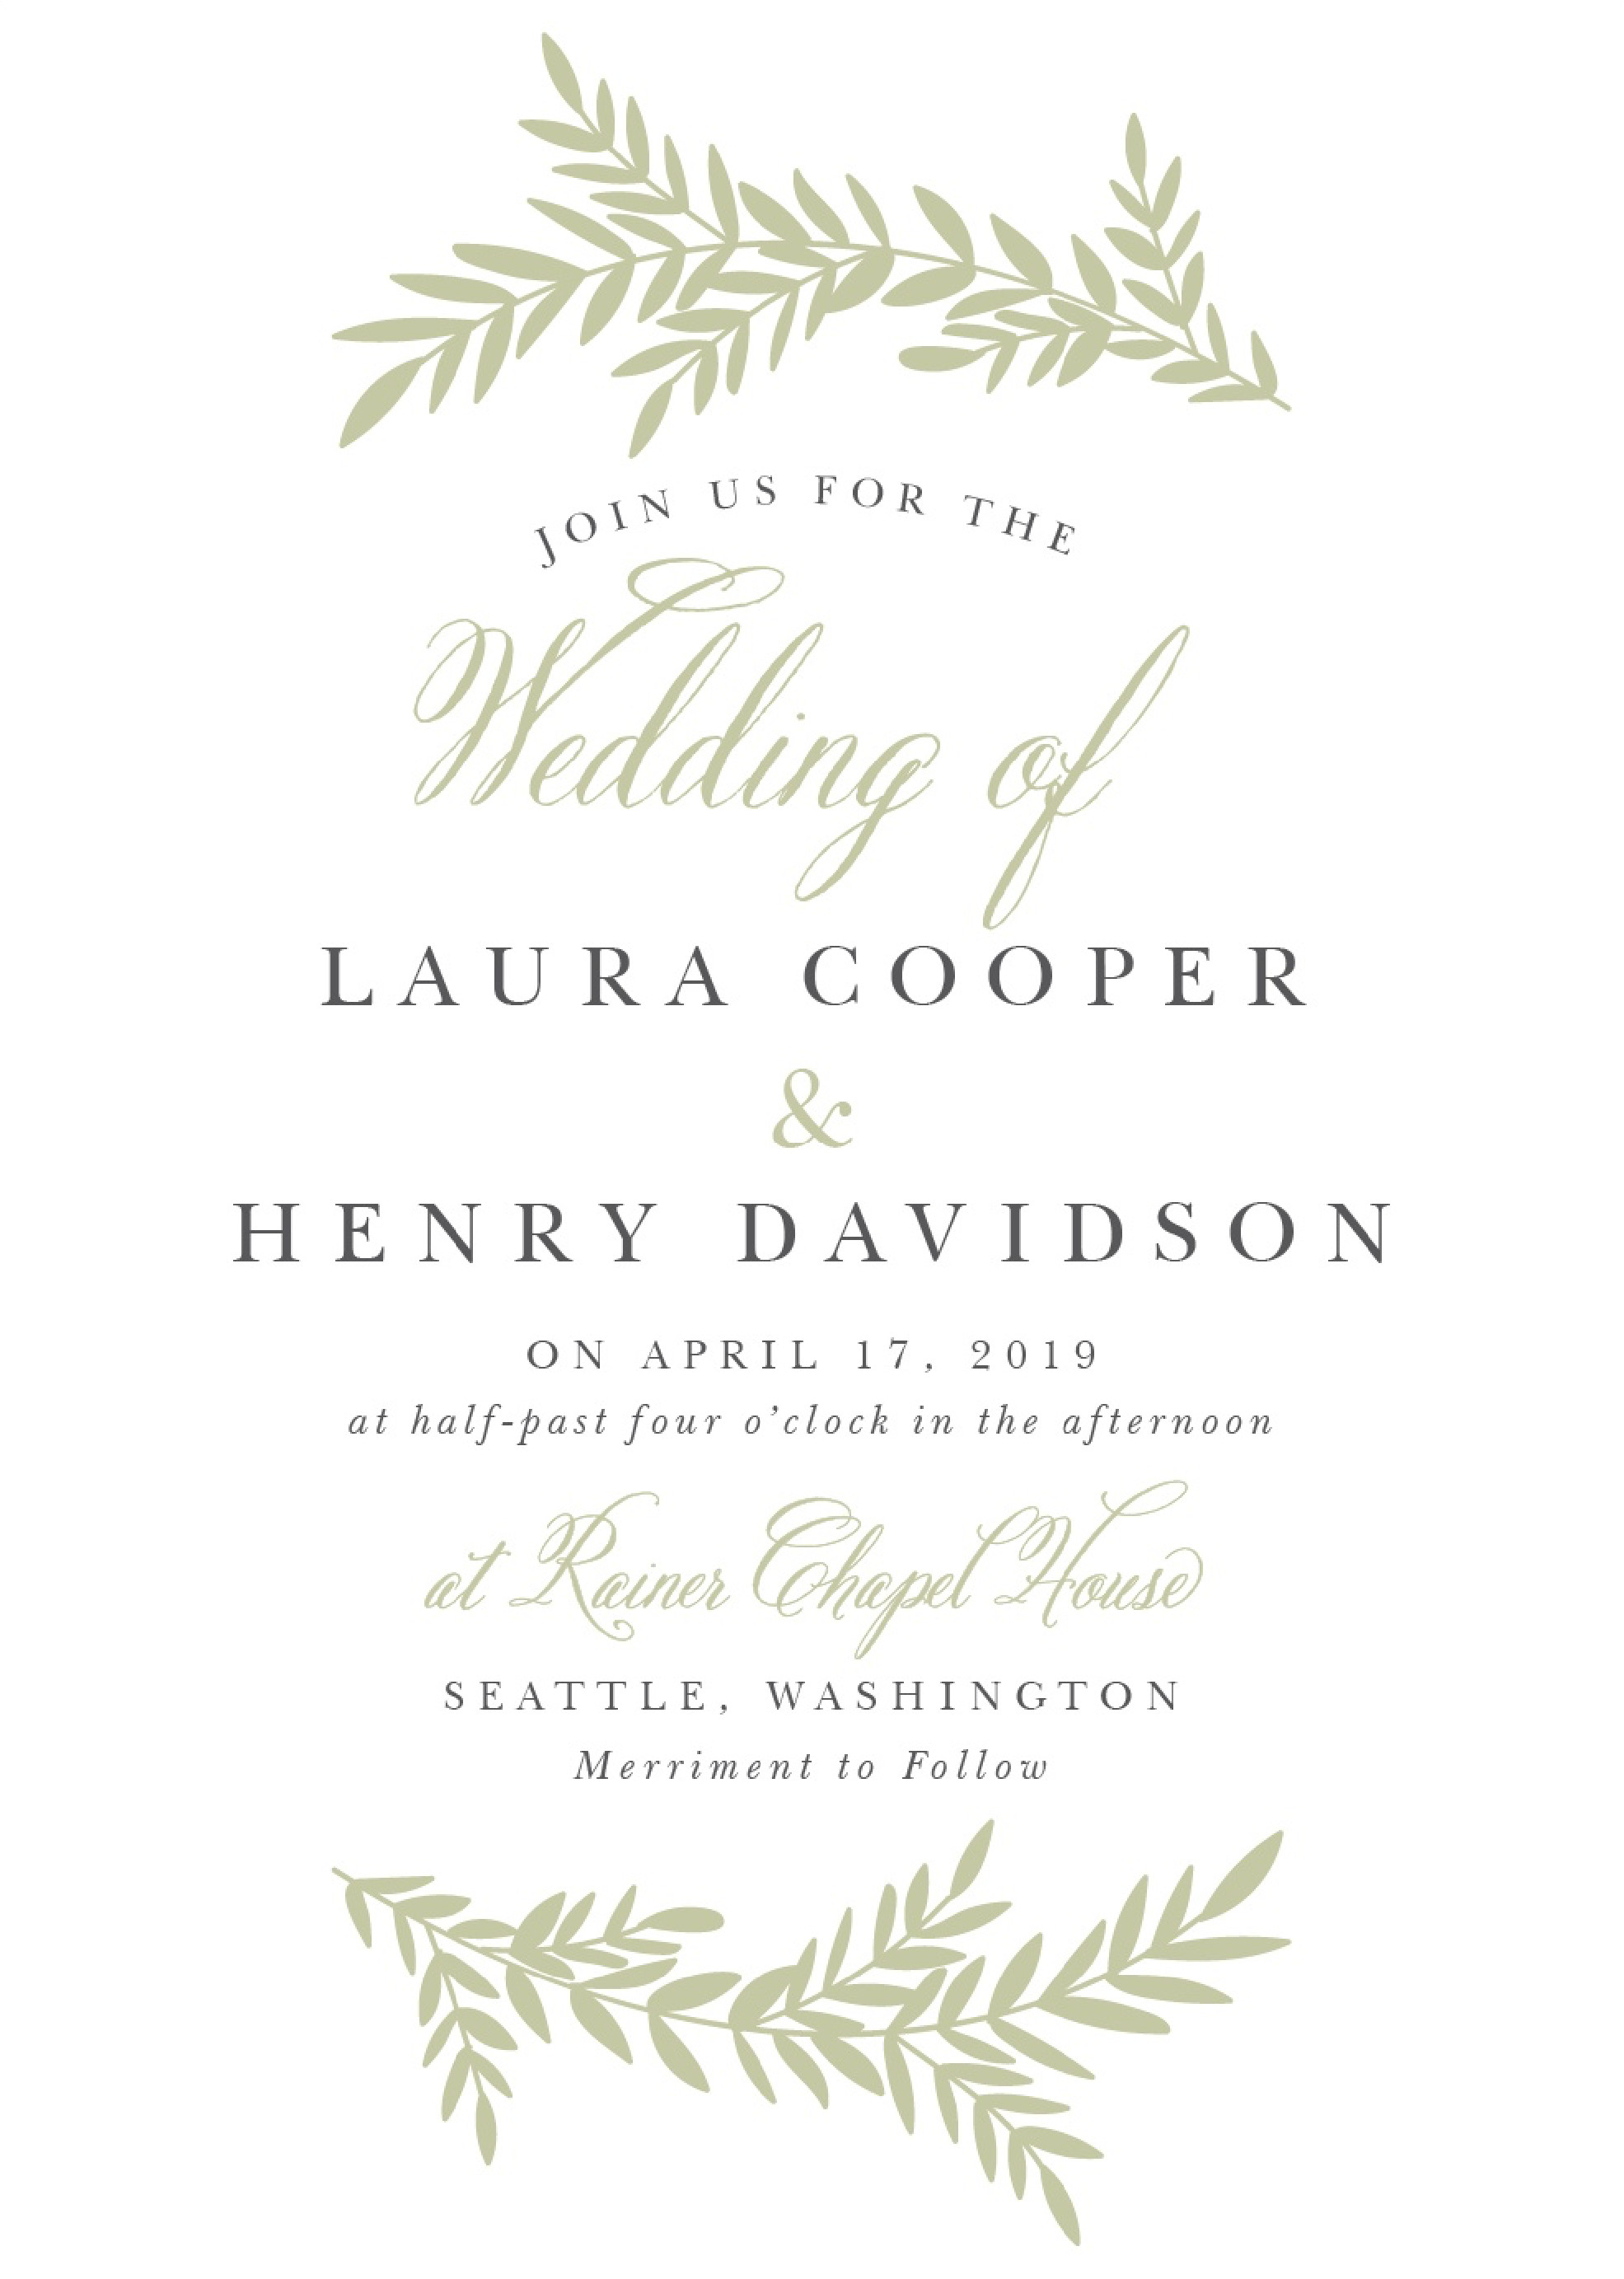 Wedding Invitation Wording Samples